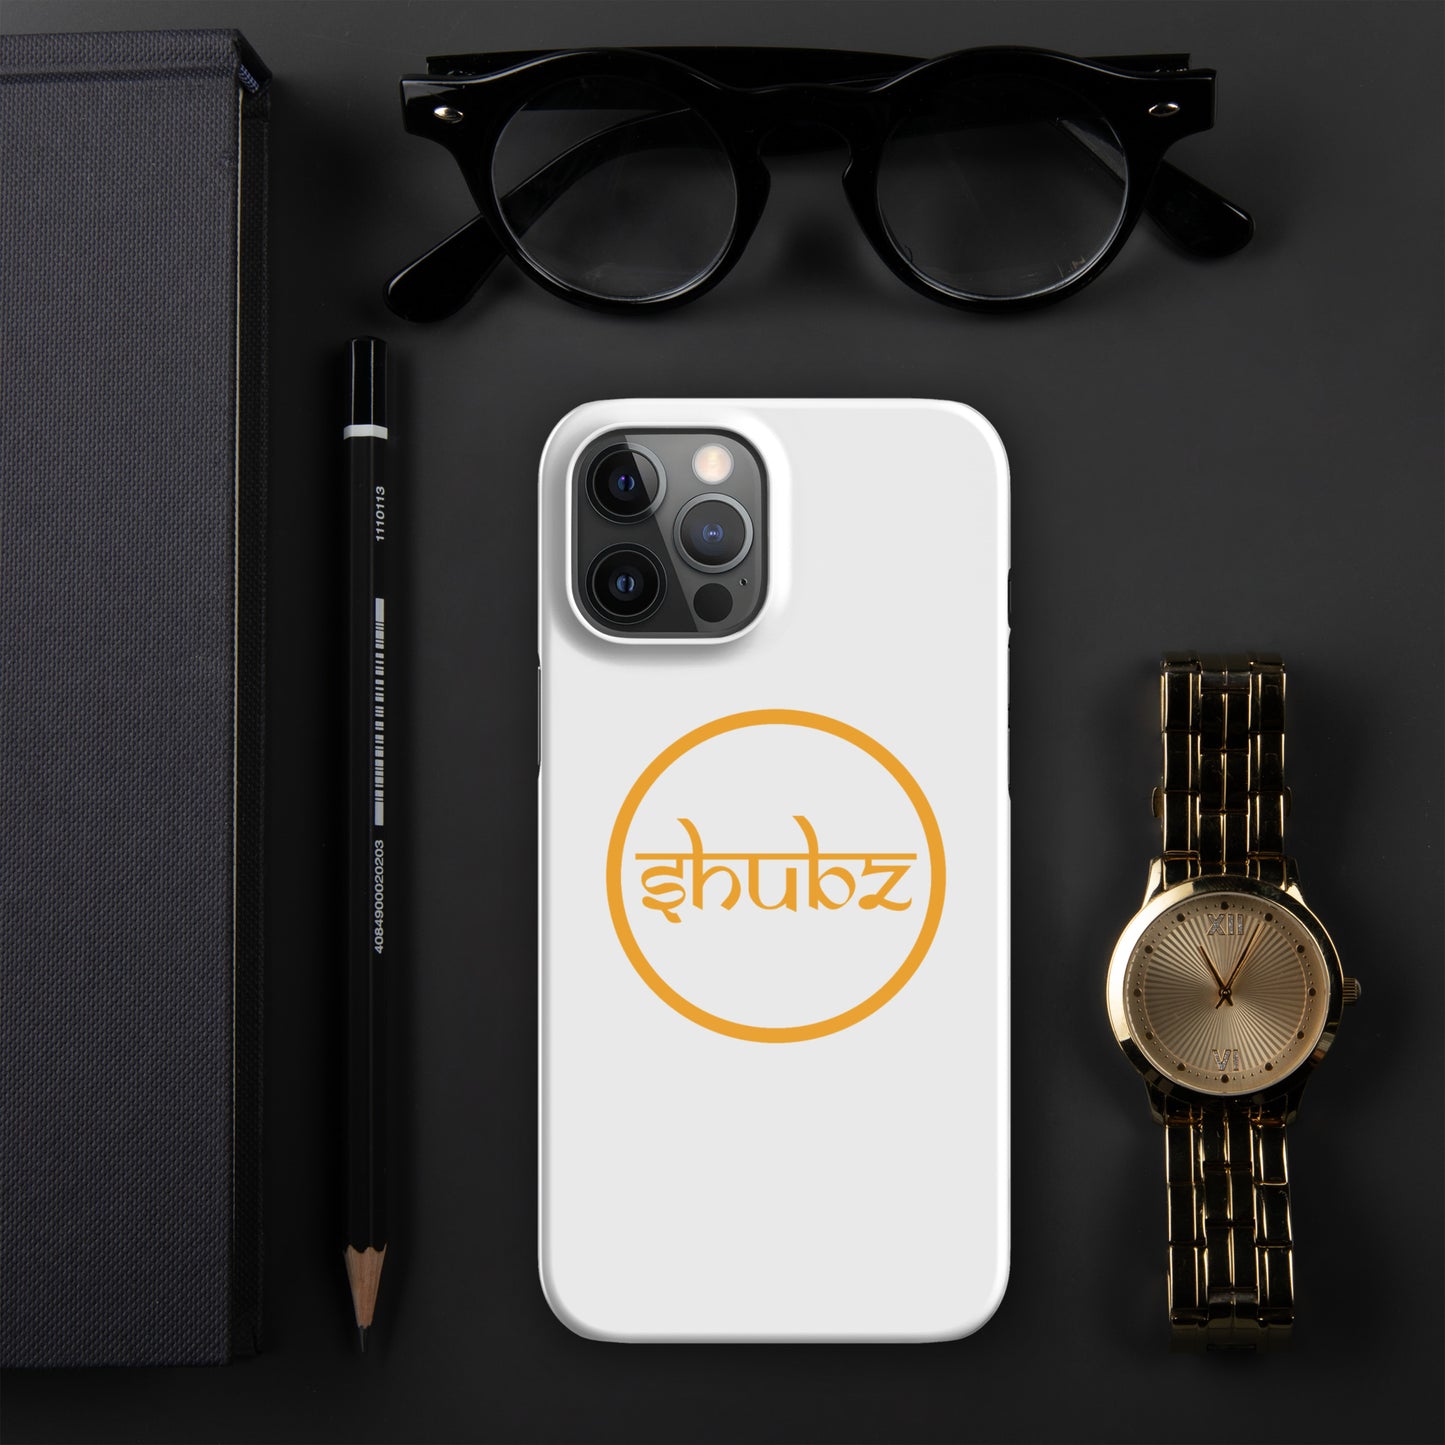 Shubz Logo Iphone Phone Case